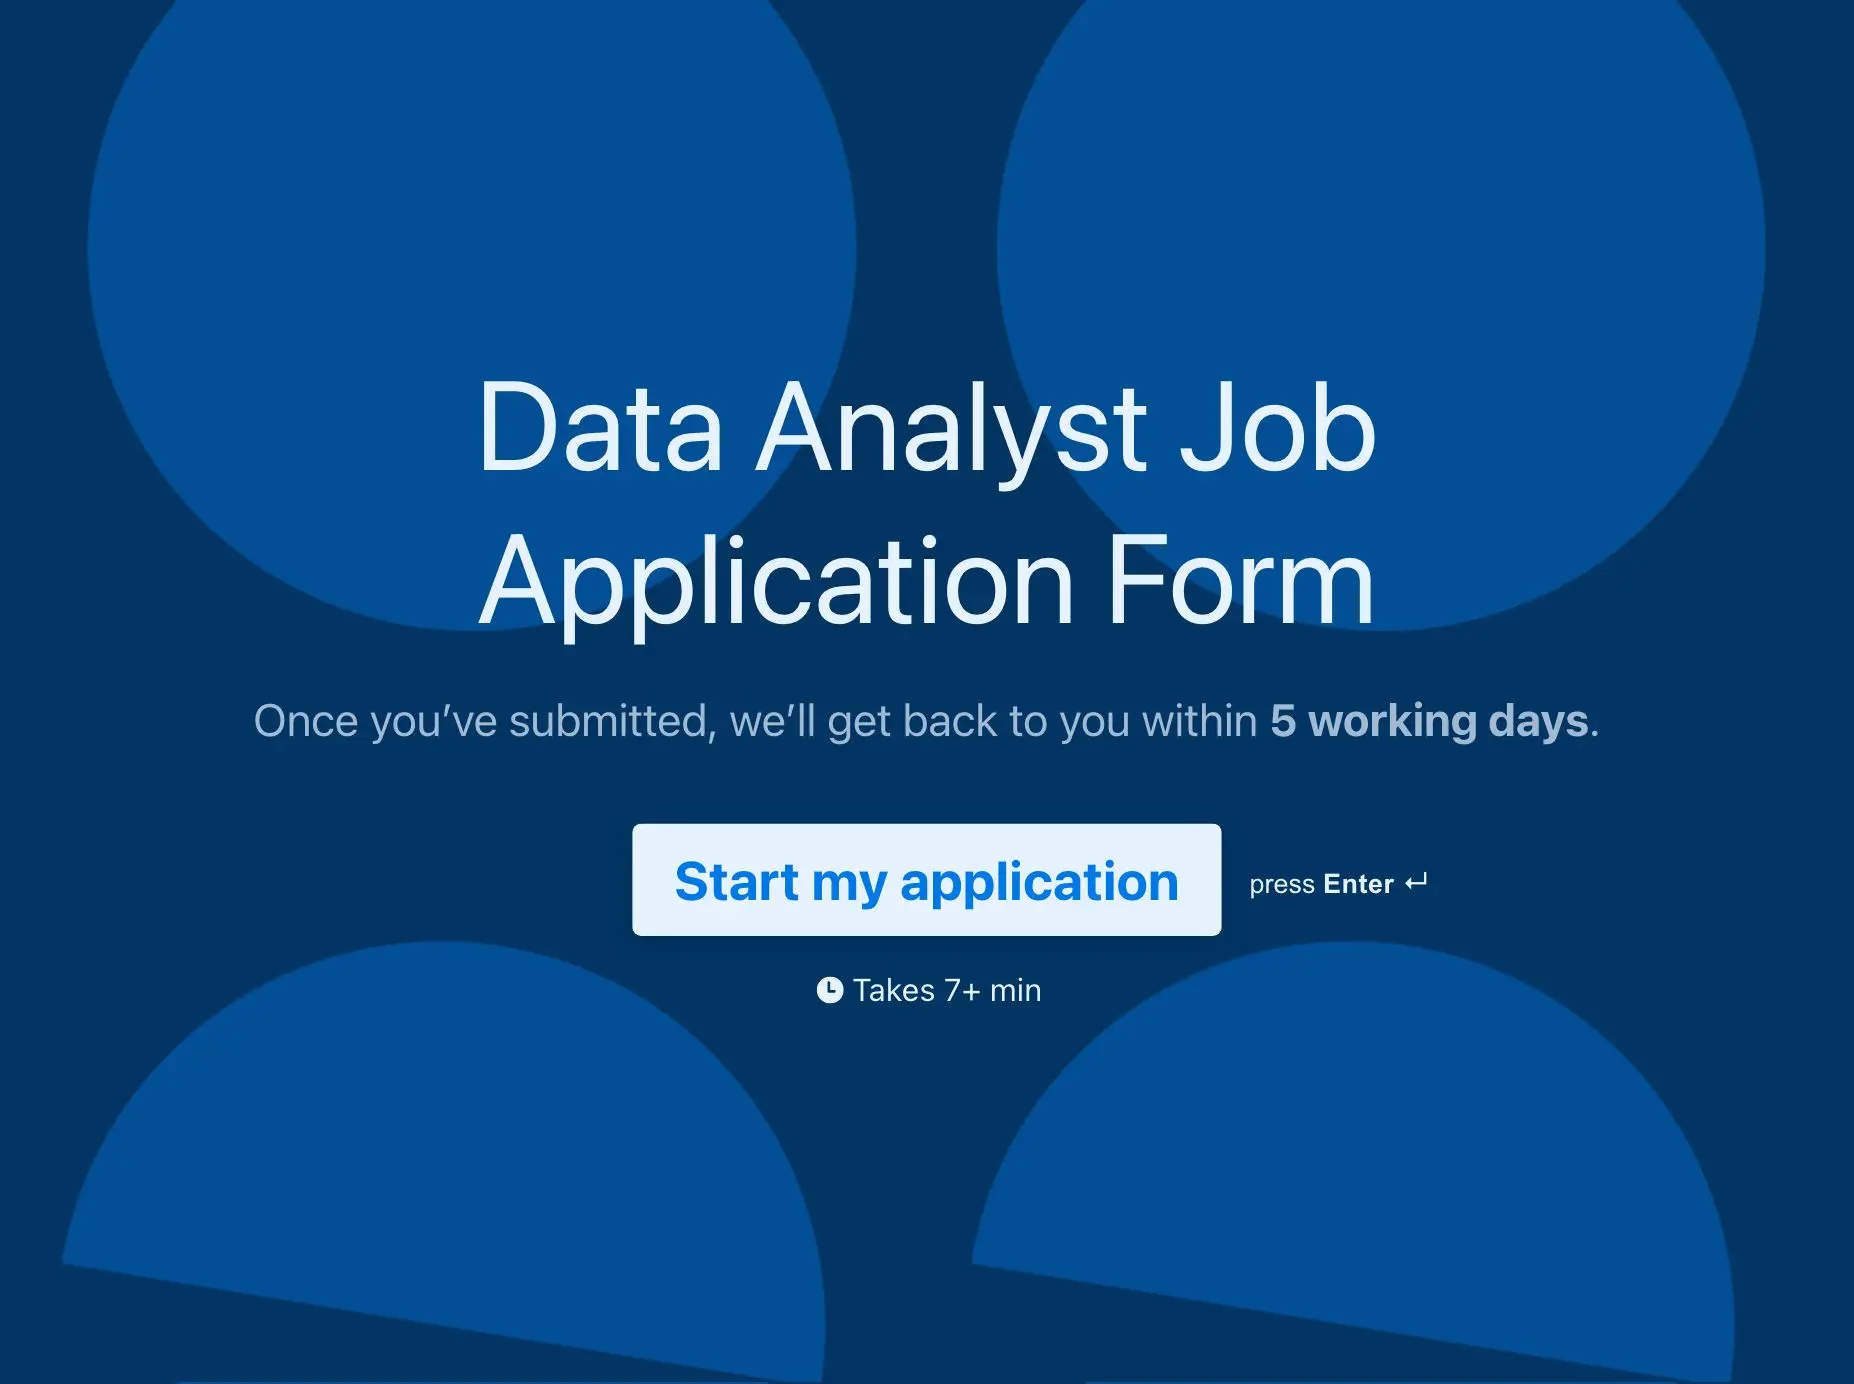 Data Analyst Job Application Form Template Hero